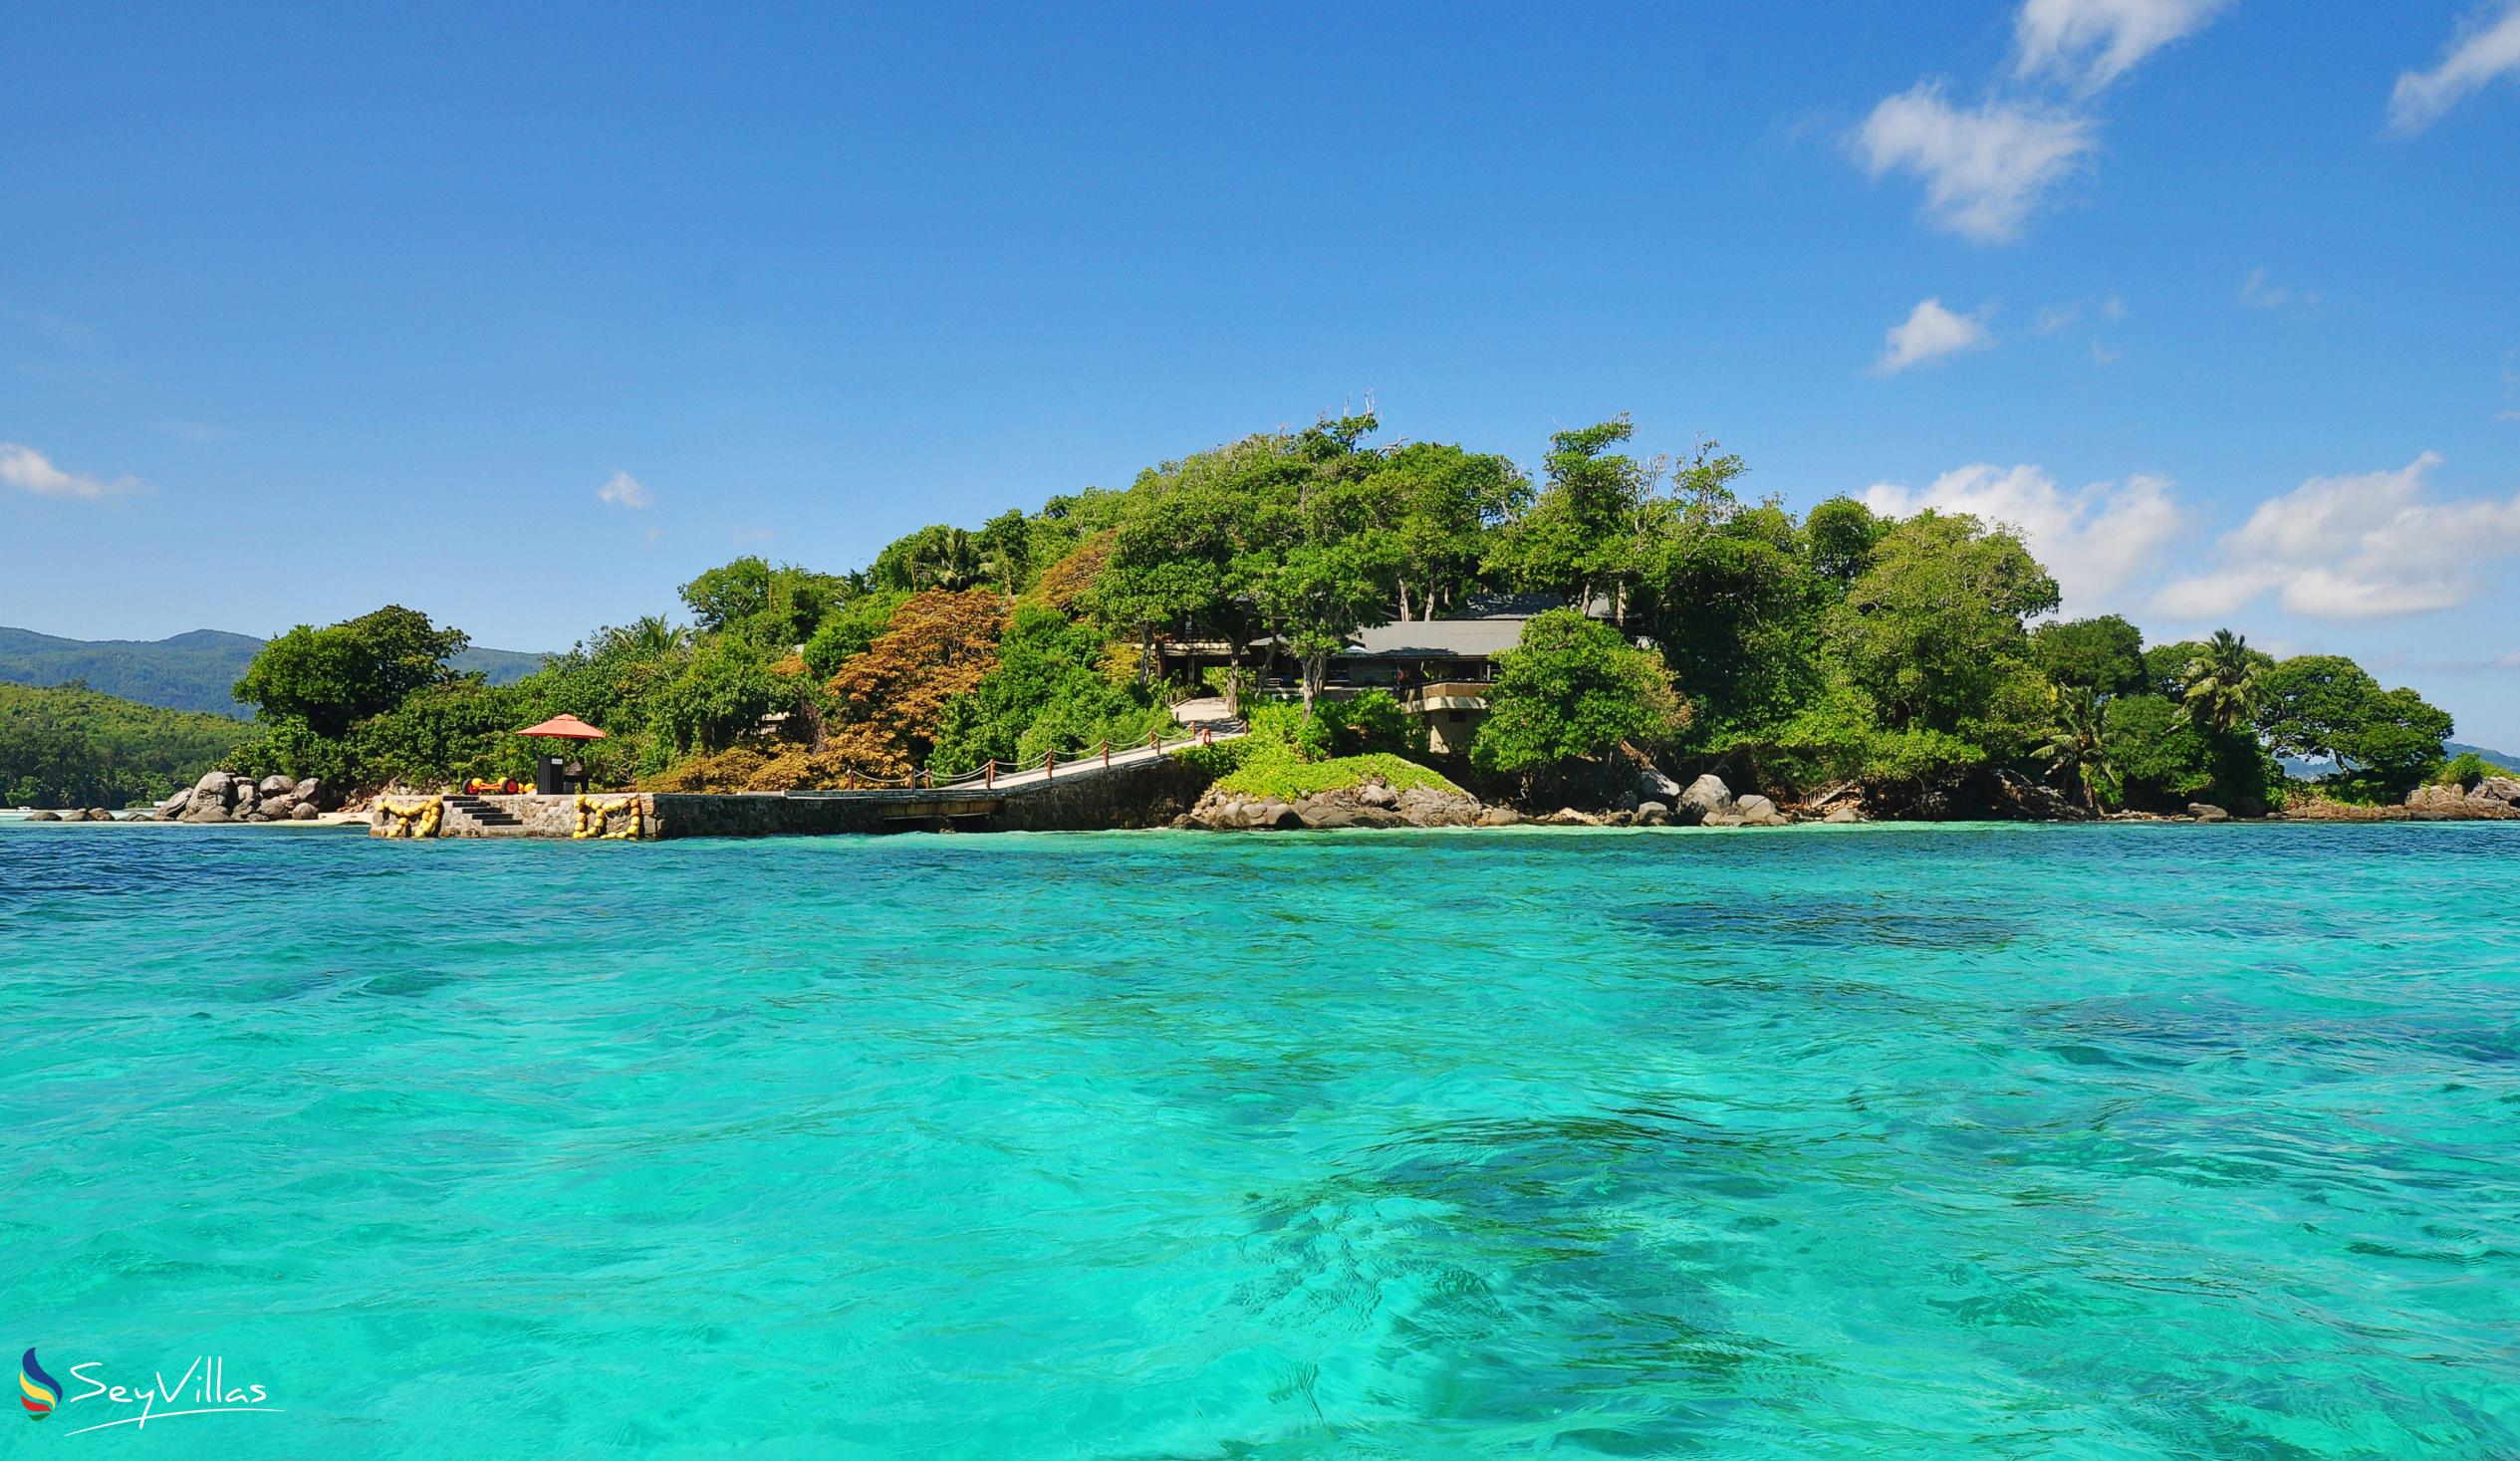 Photo 81: JA Enchanted Island Resort - Location - Round Island (Seychelles)